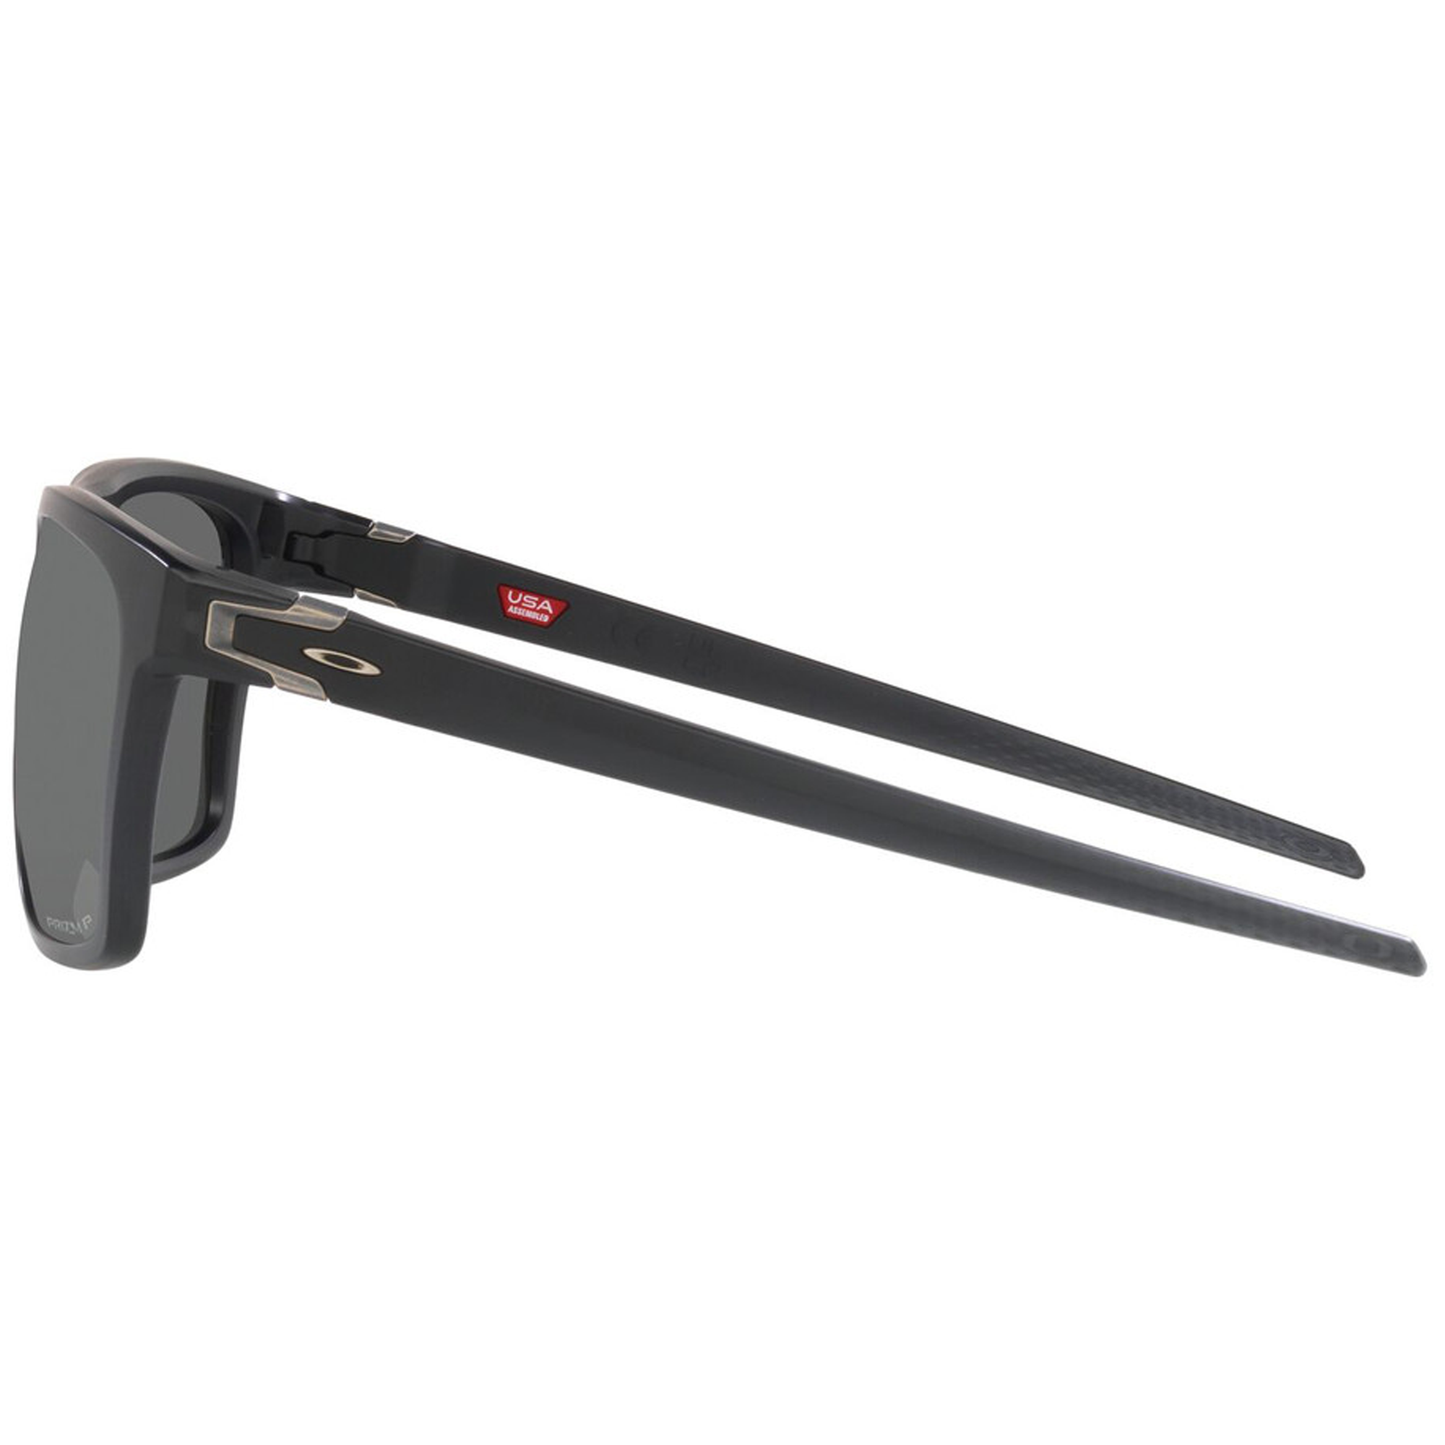 Oakley Leffingwell Sunglasses (Matte Black Ink) Prizm Black Polarized Lens - Free Case